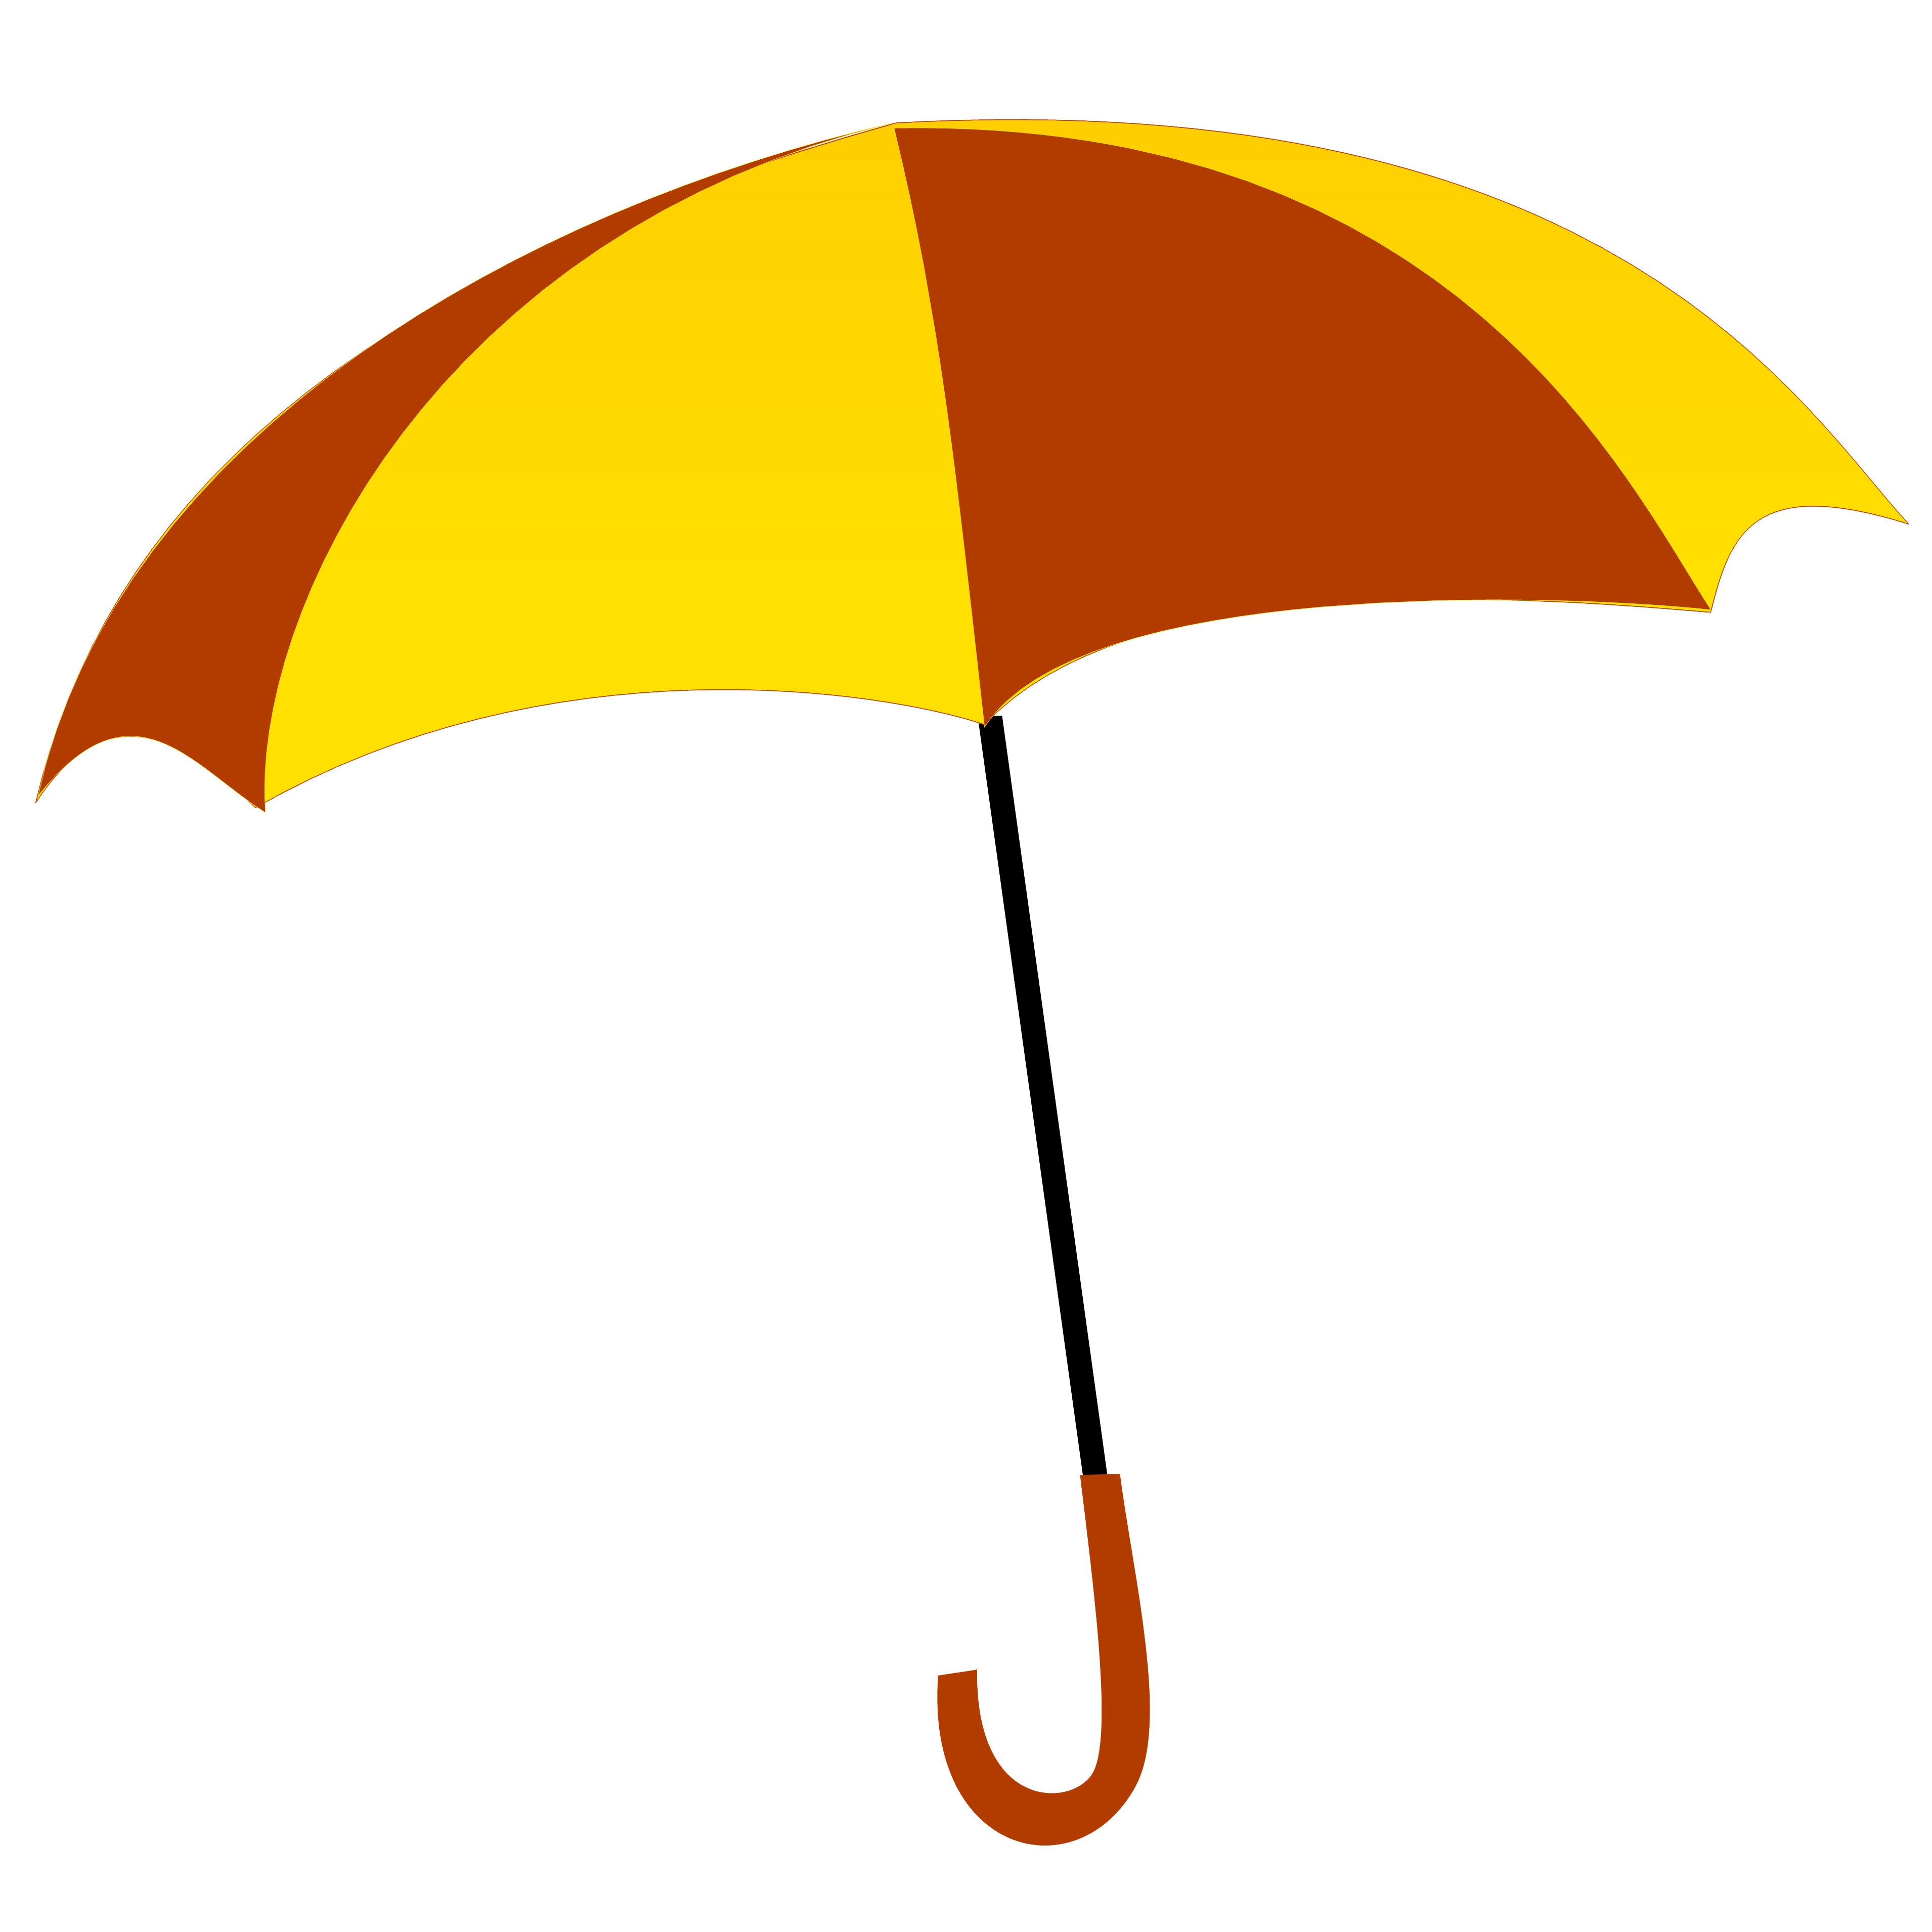 Umbrella Clipart PNG Image - PurePNG | Free transparent CC0 PNG Image